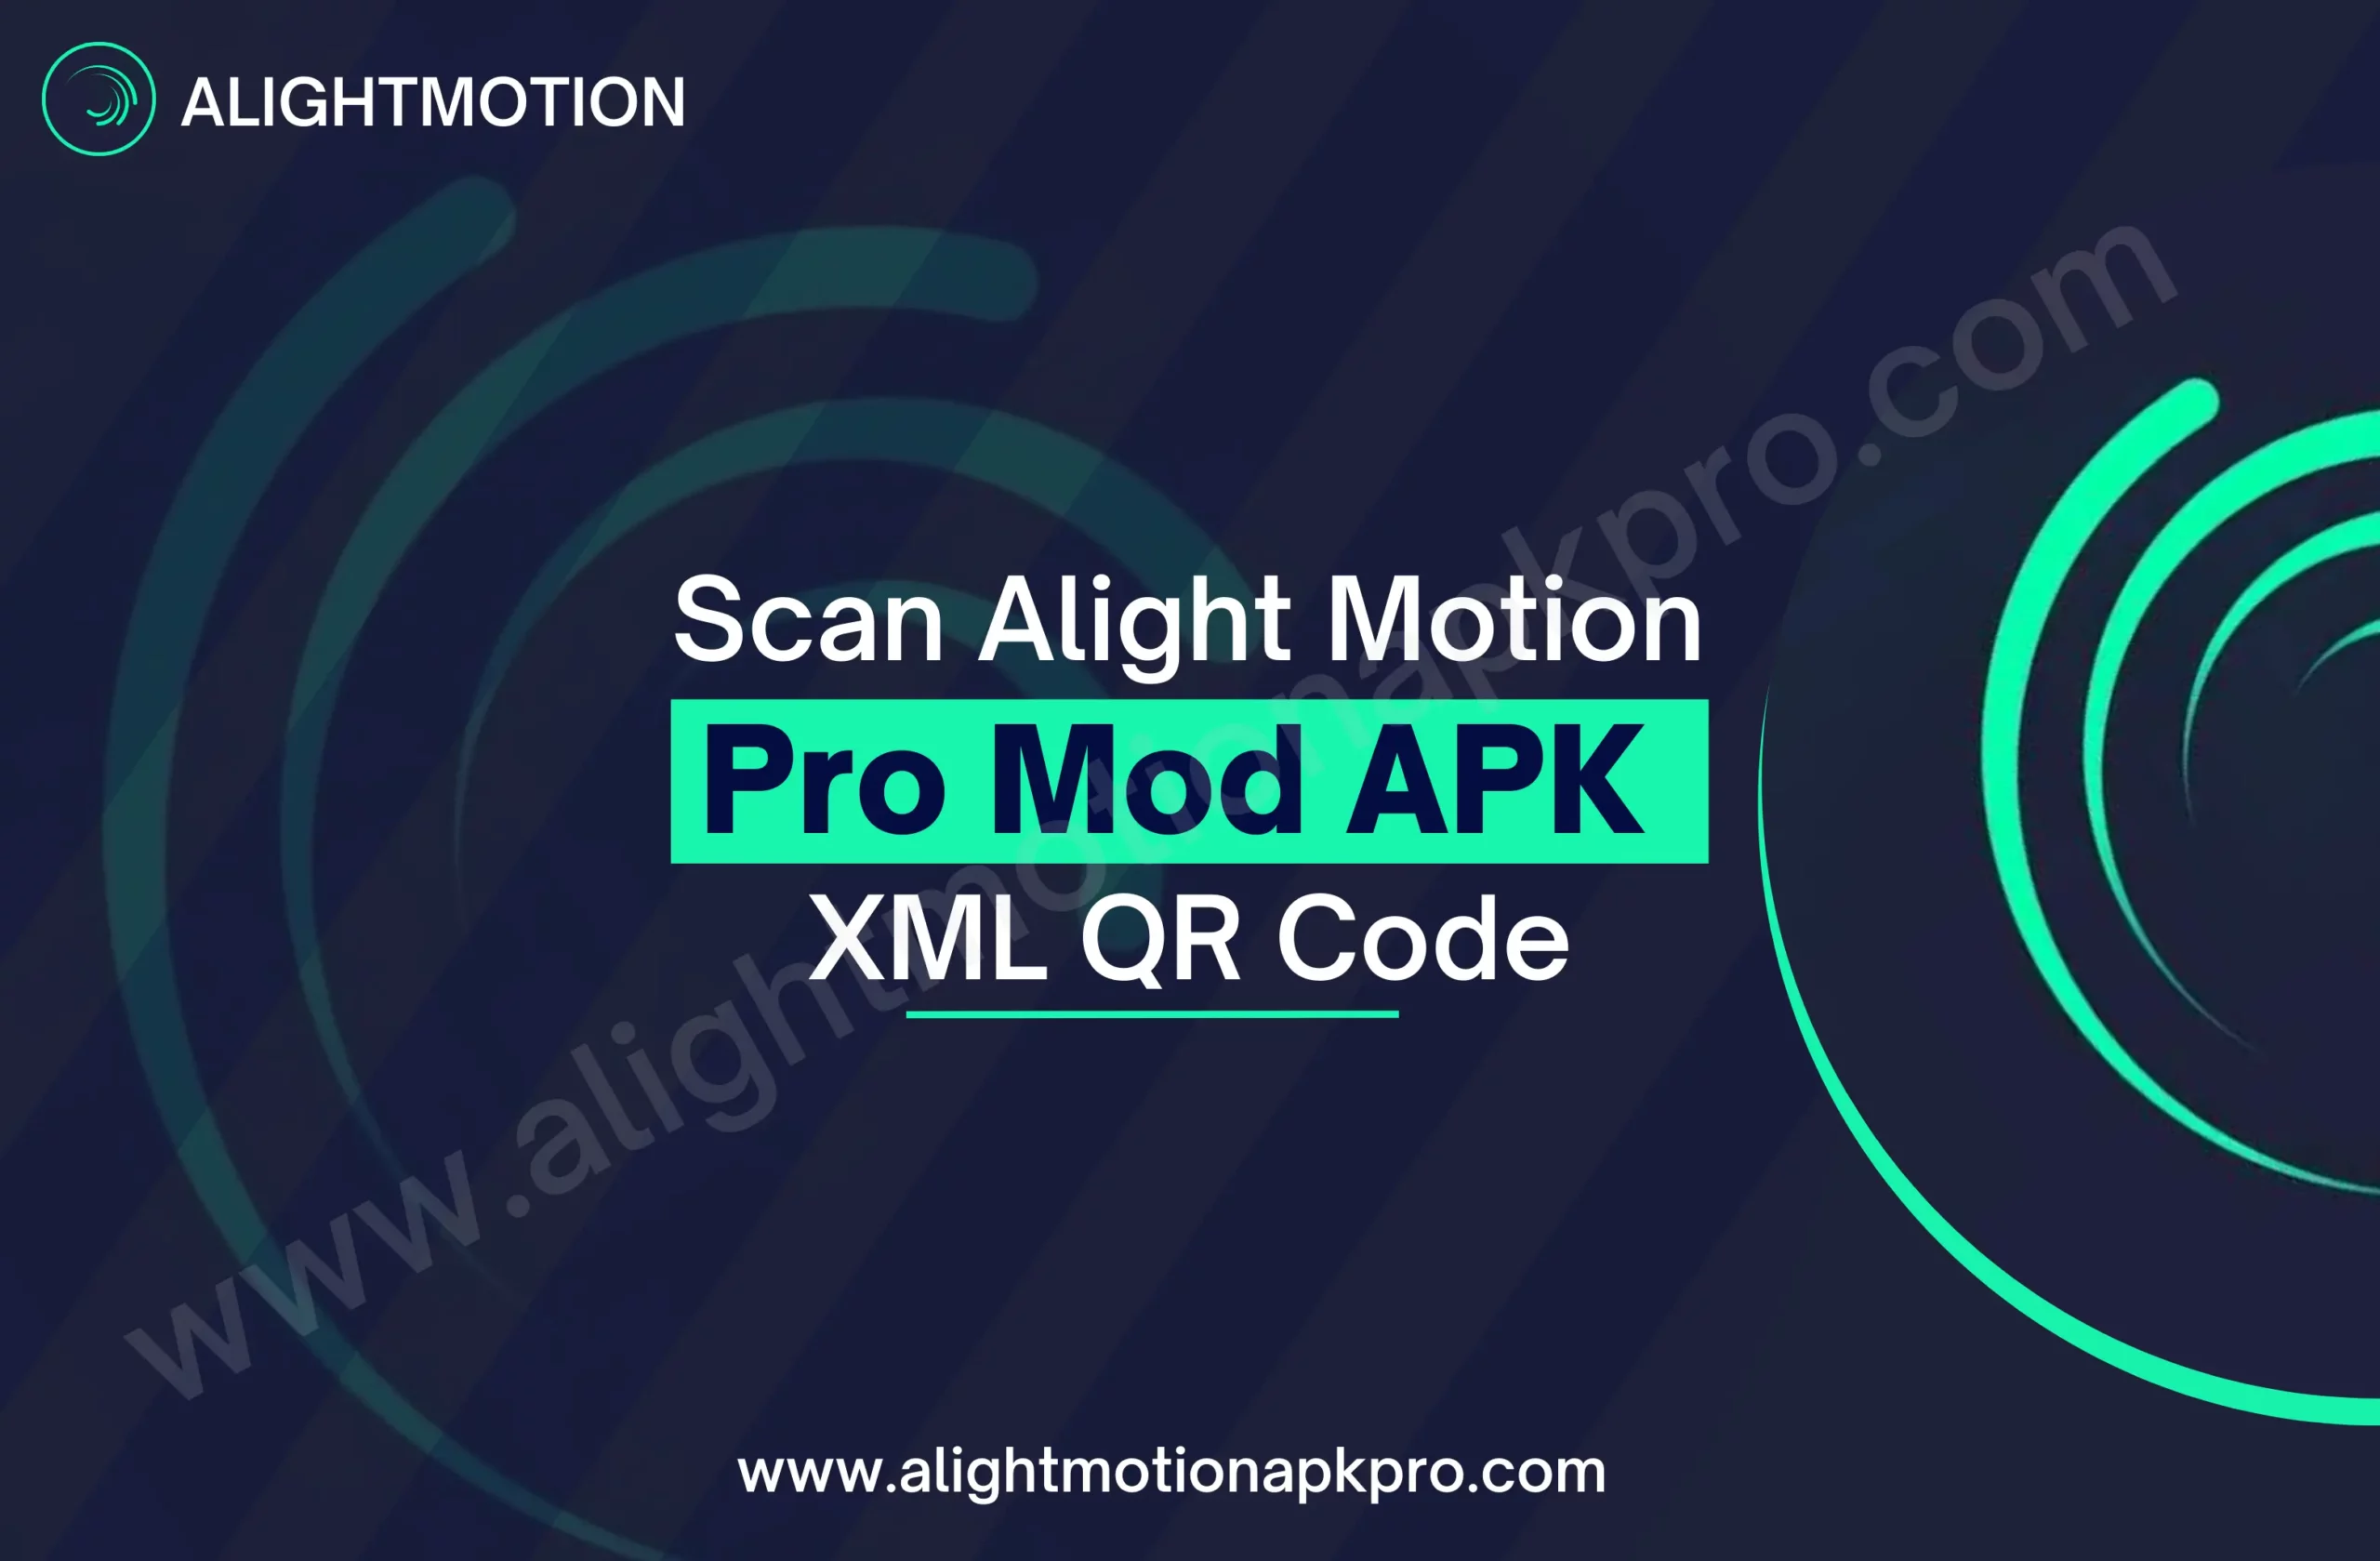 QR code presets by alightmotionapkpro.com